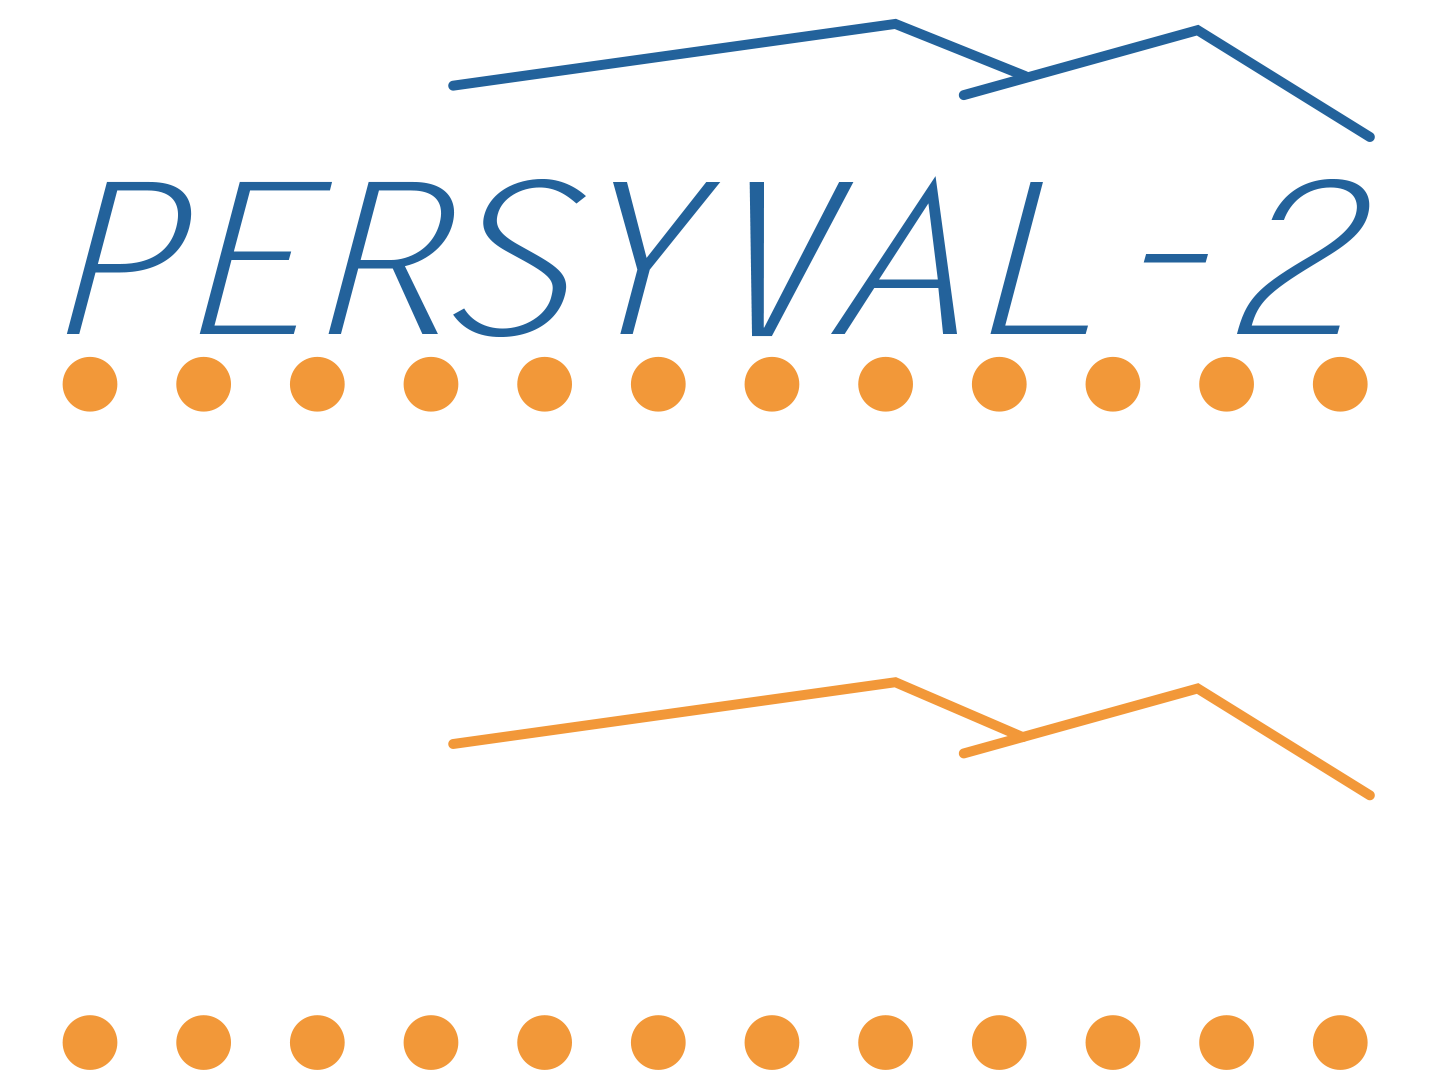 Persyval-Lab 2